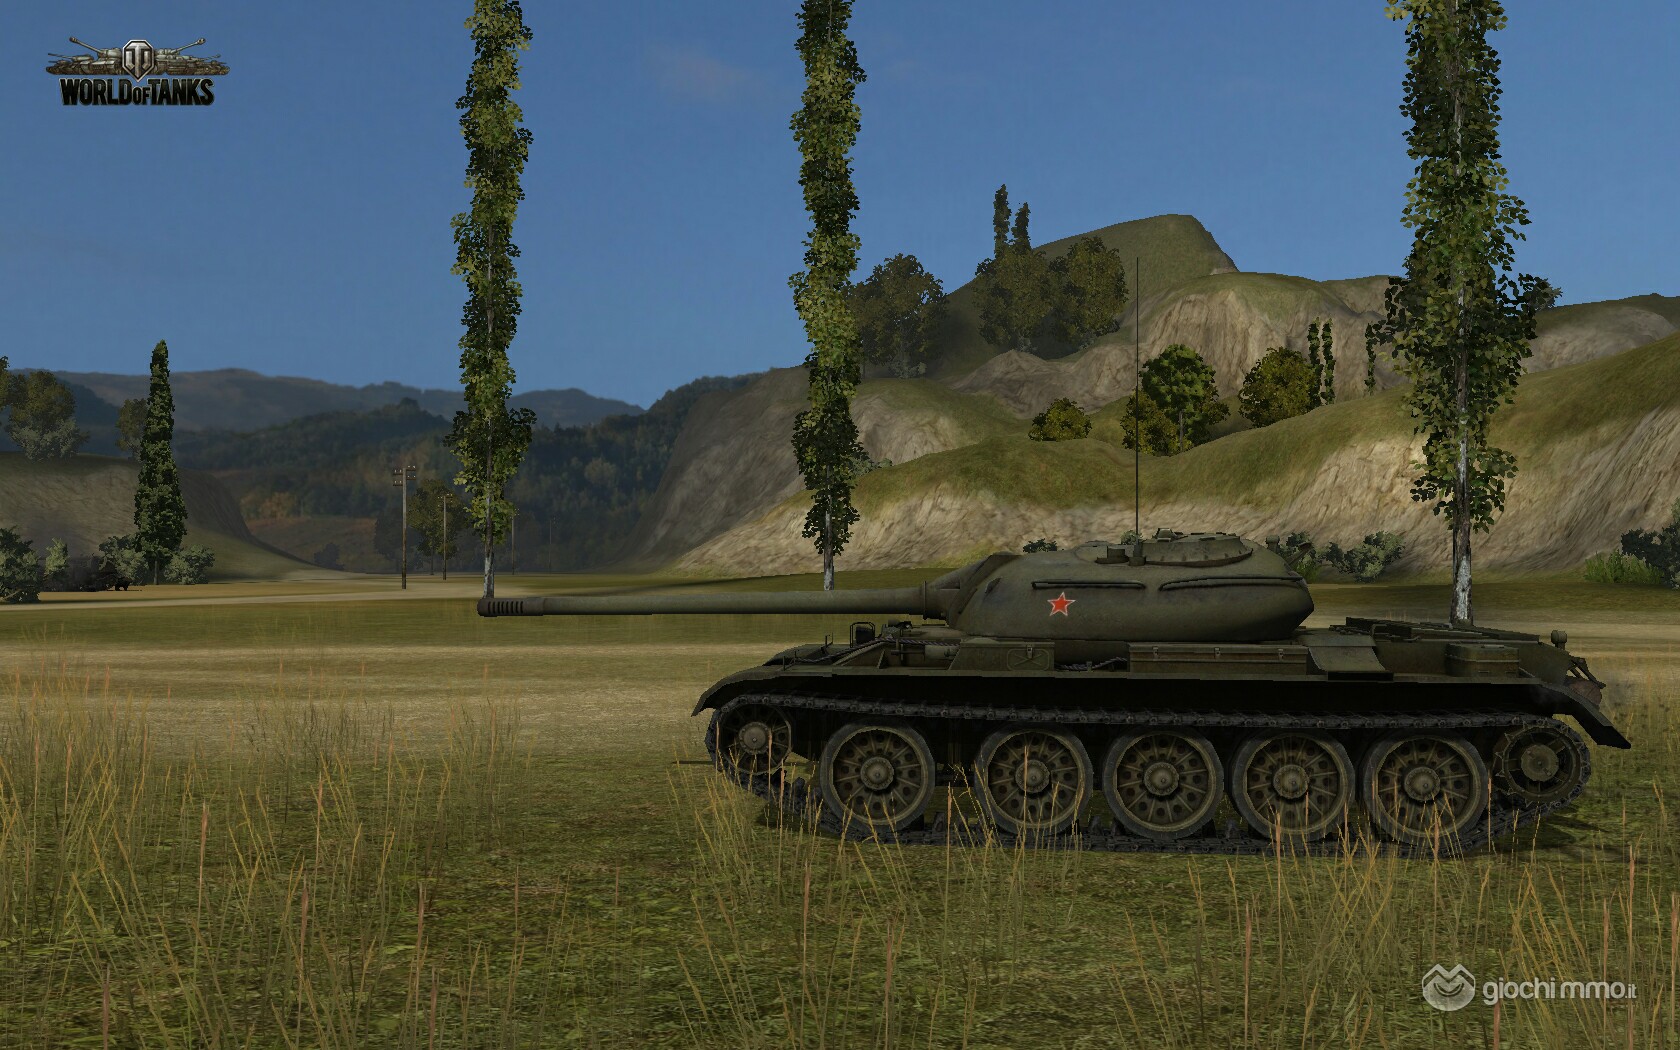 Clicca sull'immagine per ingrandirlaNome:   World of Tanks screen5.jpgVisite: 93Dimensione:   457.0 KBID: 8206